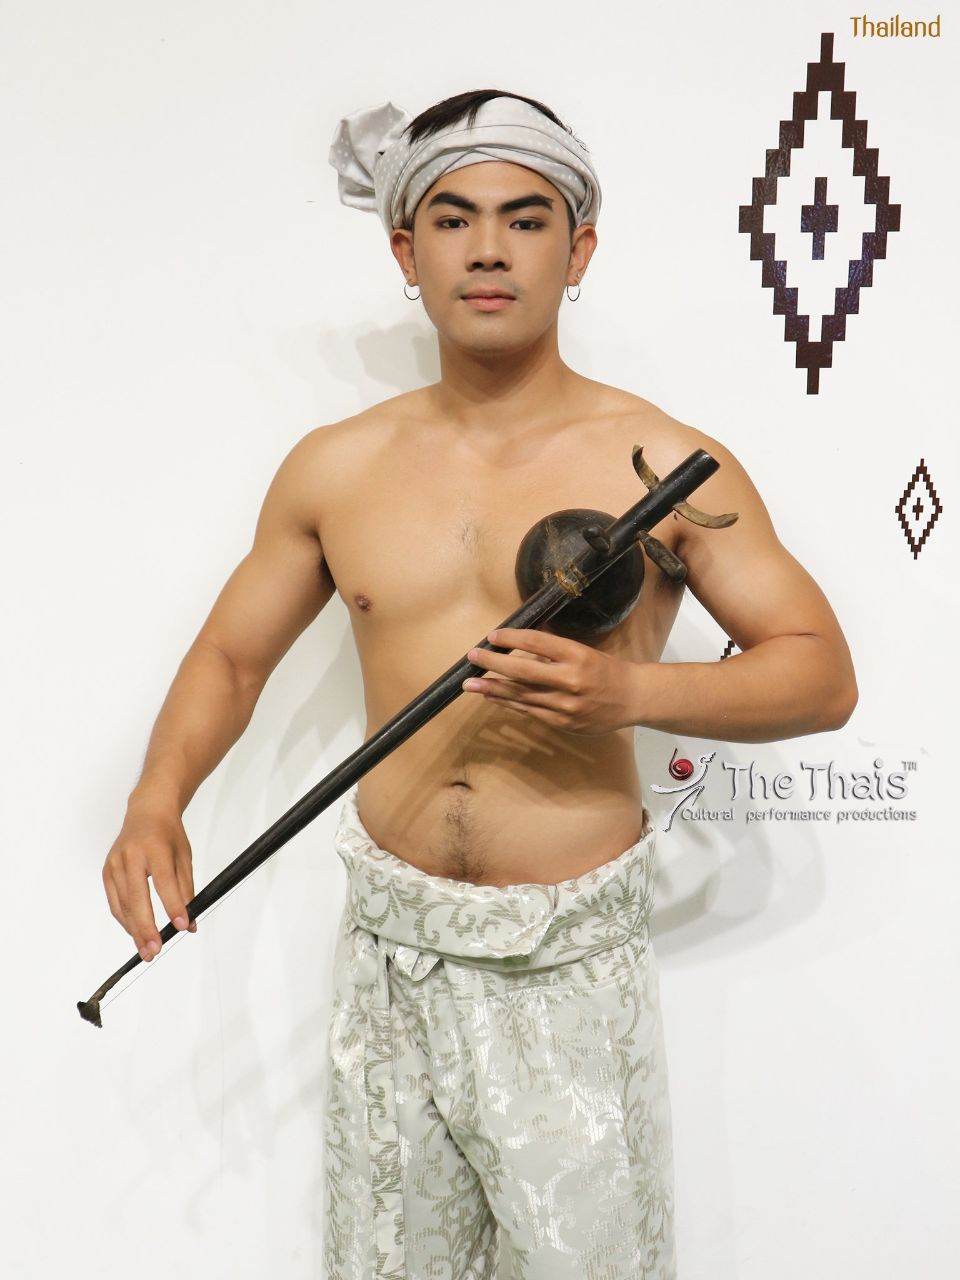 PHIN PIA (พิณเปี๊ยะ) Thai Lanna Musical Instrument | THAILAND 🇹🇭